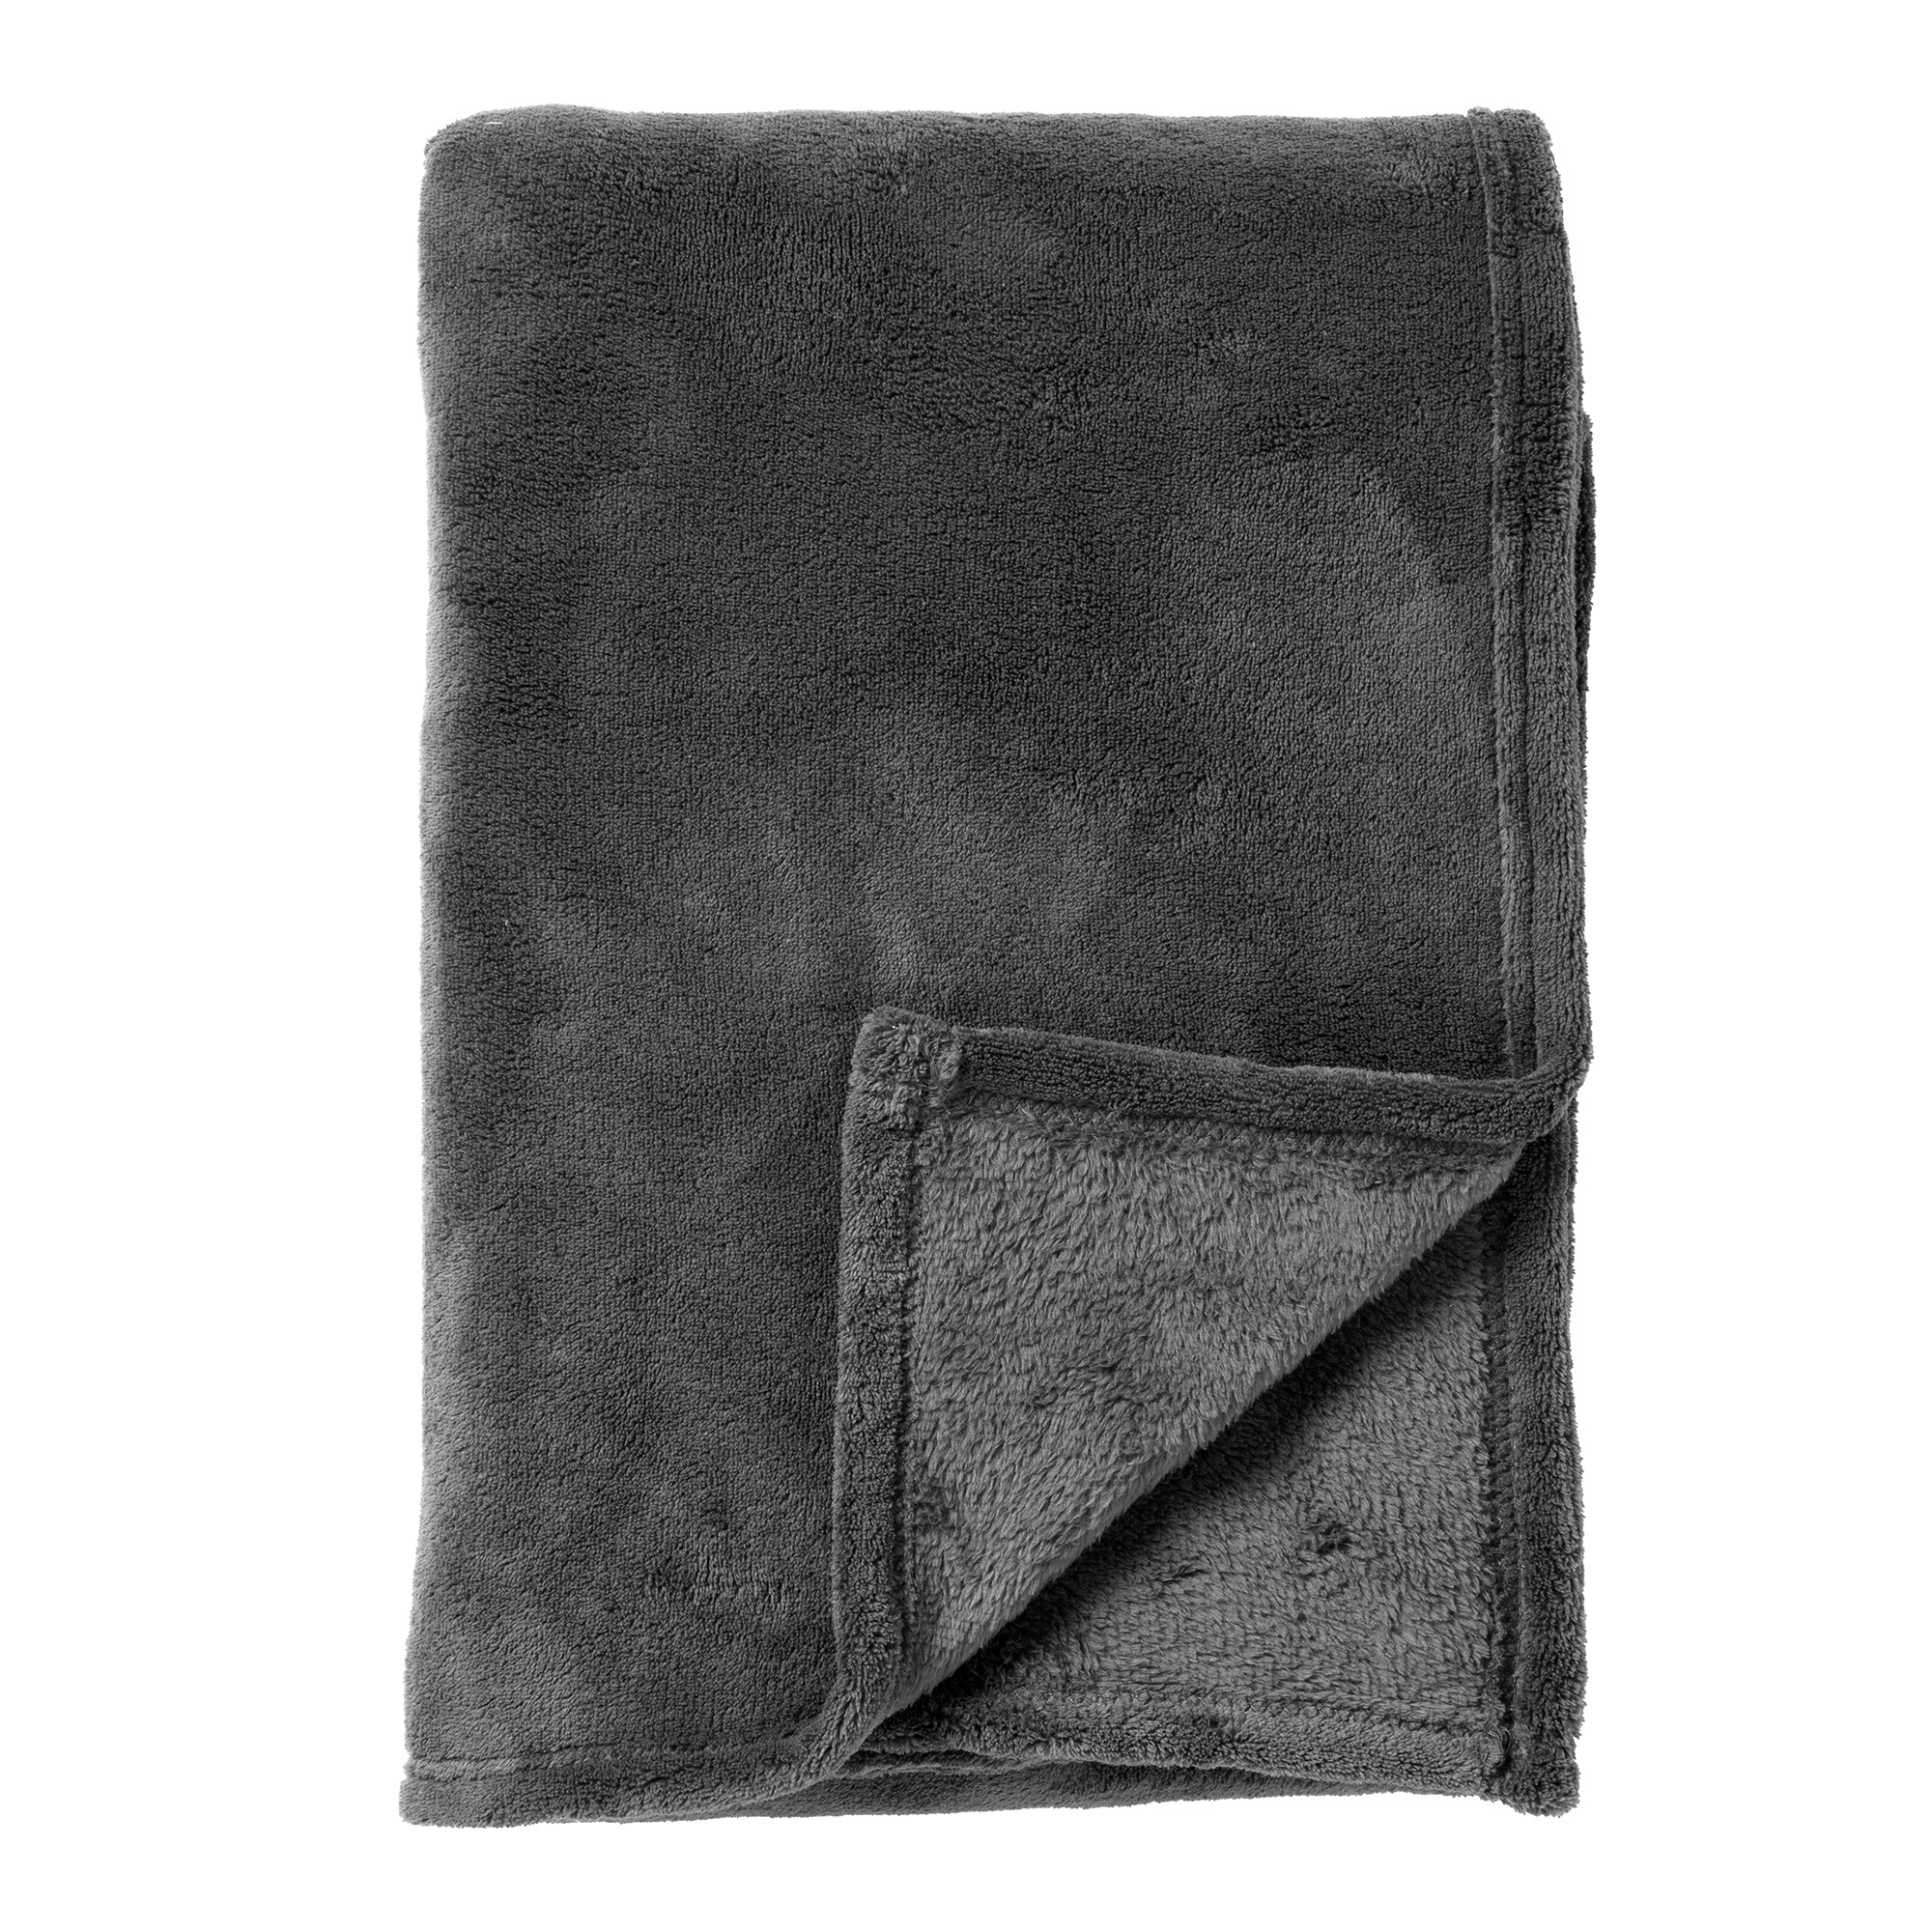 SIDNEY - Plaid Fleece deken van 100% gerecycled polyester – superzacht - Eco Line collectie 140x180 cm - Charcoal Gray - antraciet